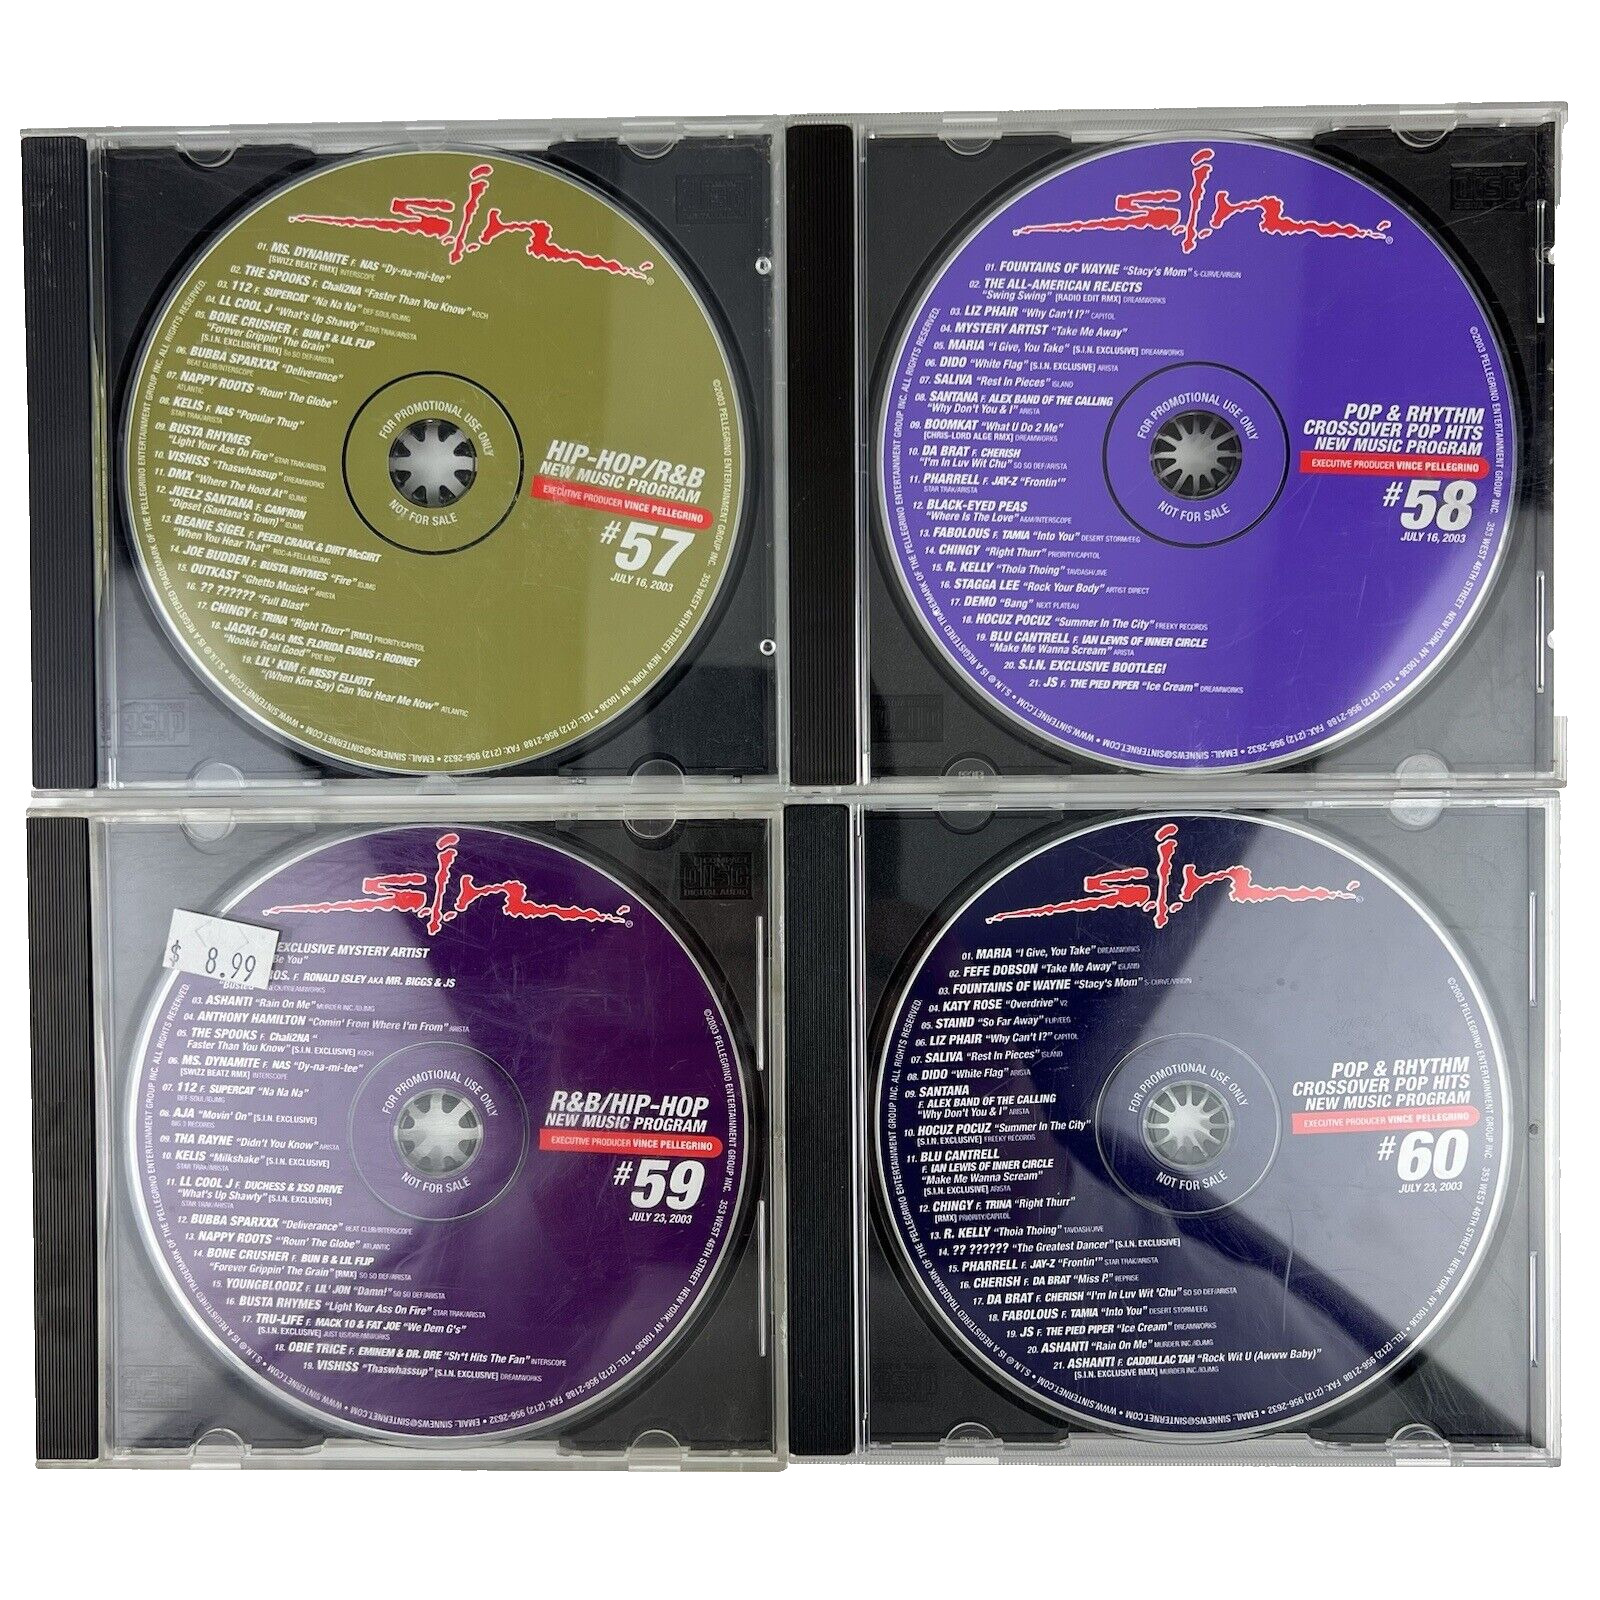 Lot of 4x RARE 2003 PROMO CDs - S.I.N. New music program - Promotional #57-60